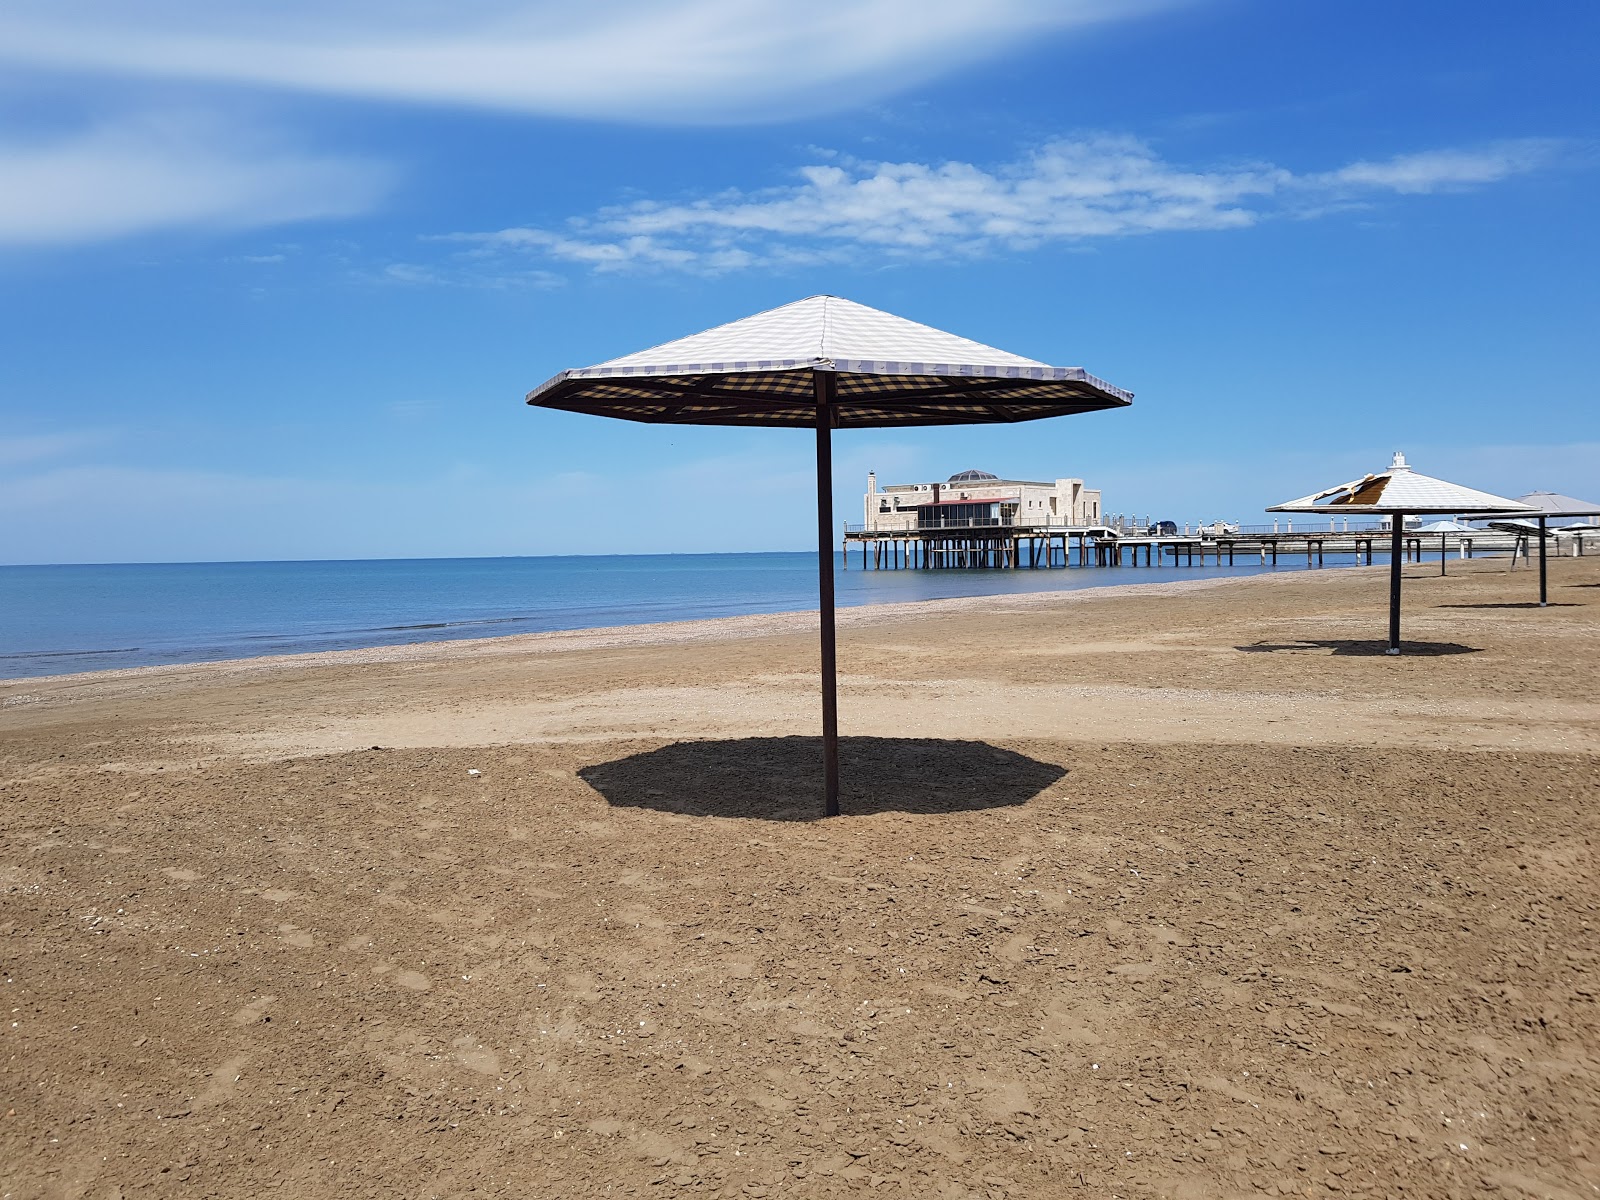 Foto de Moomba Beach - lugar popular entre os apreciadores de relaxamento